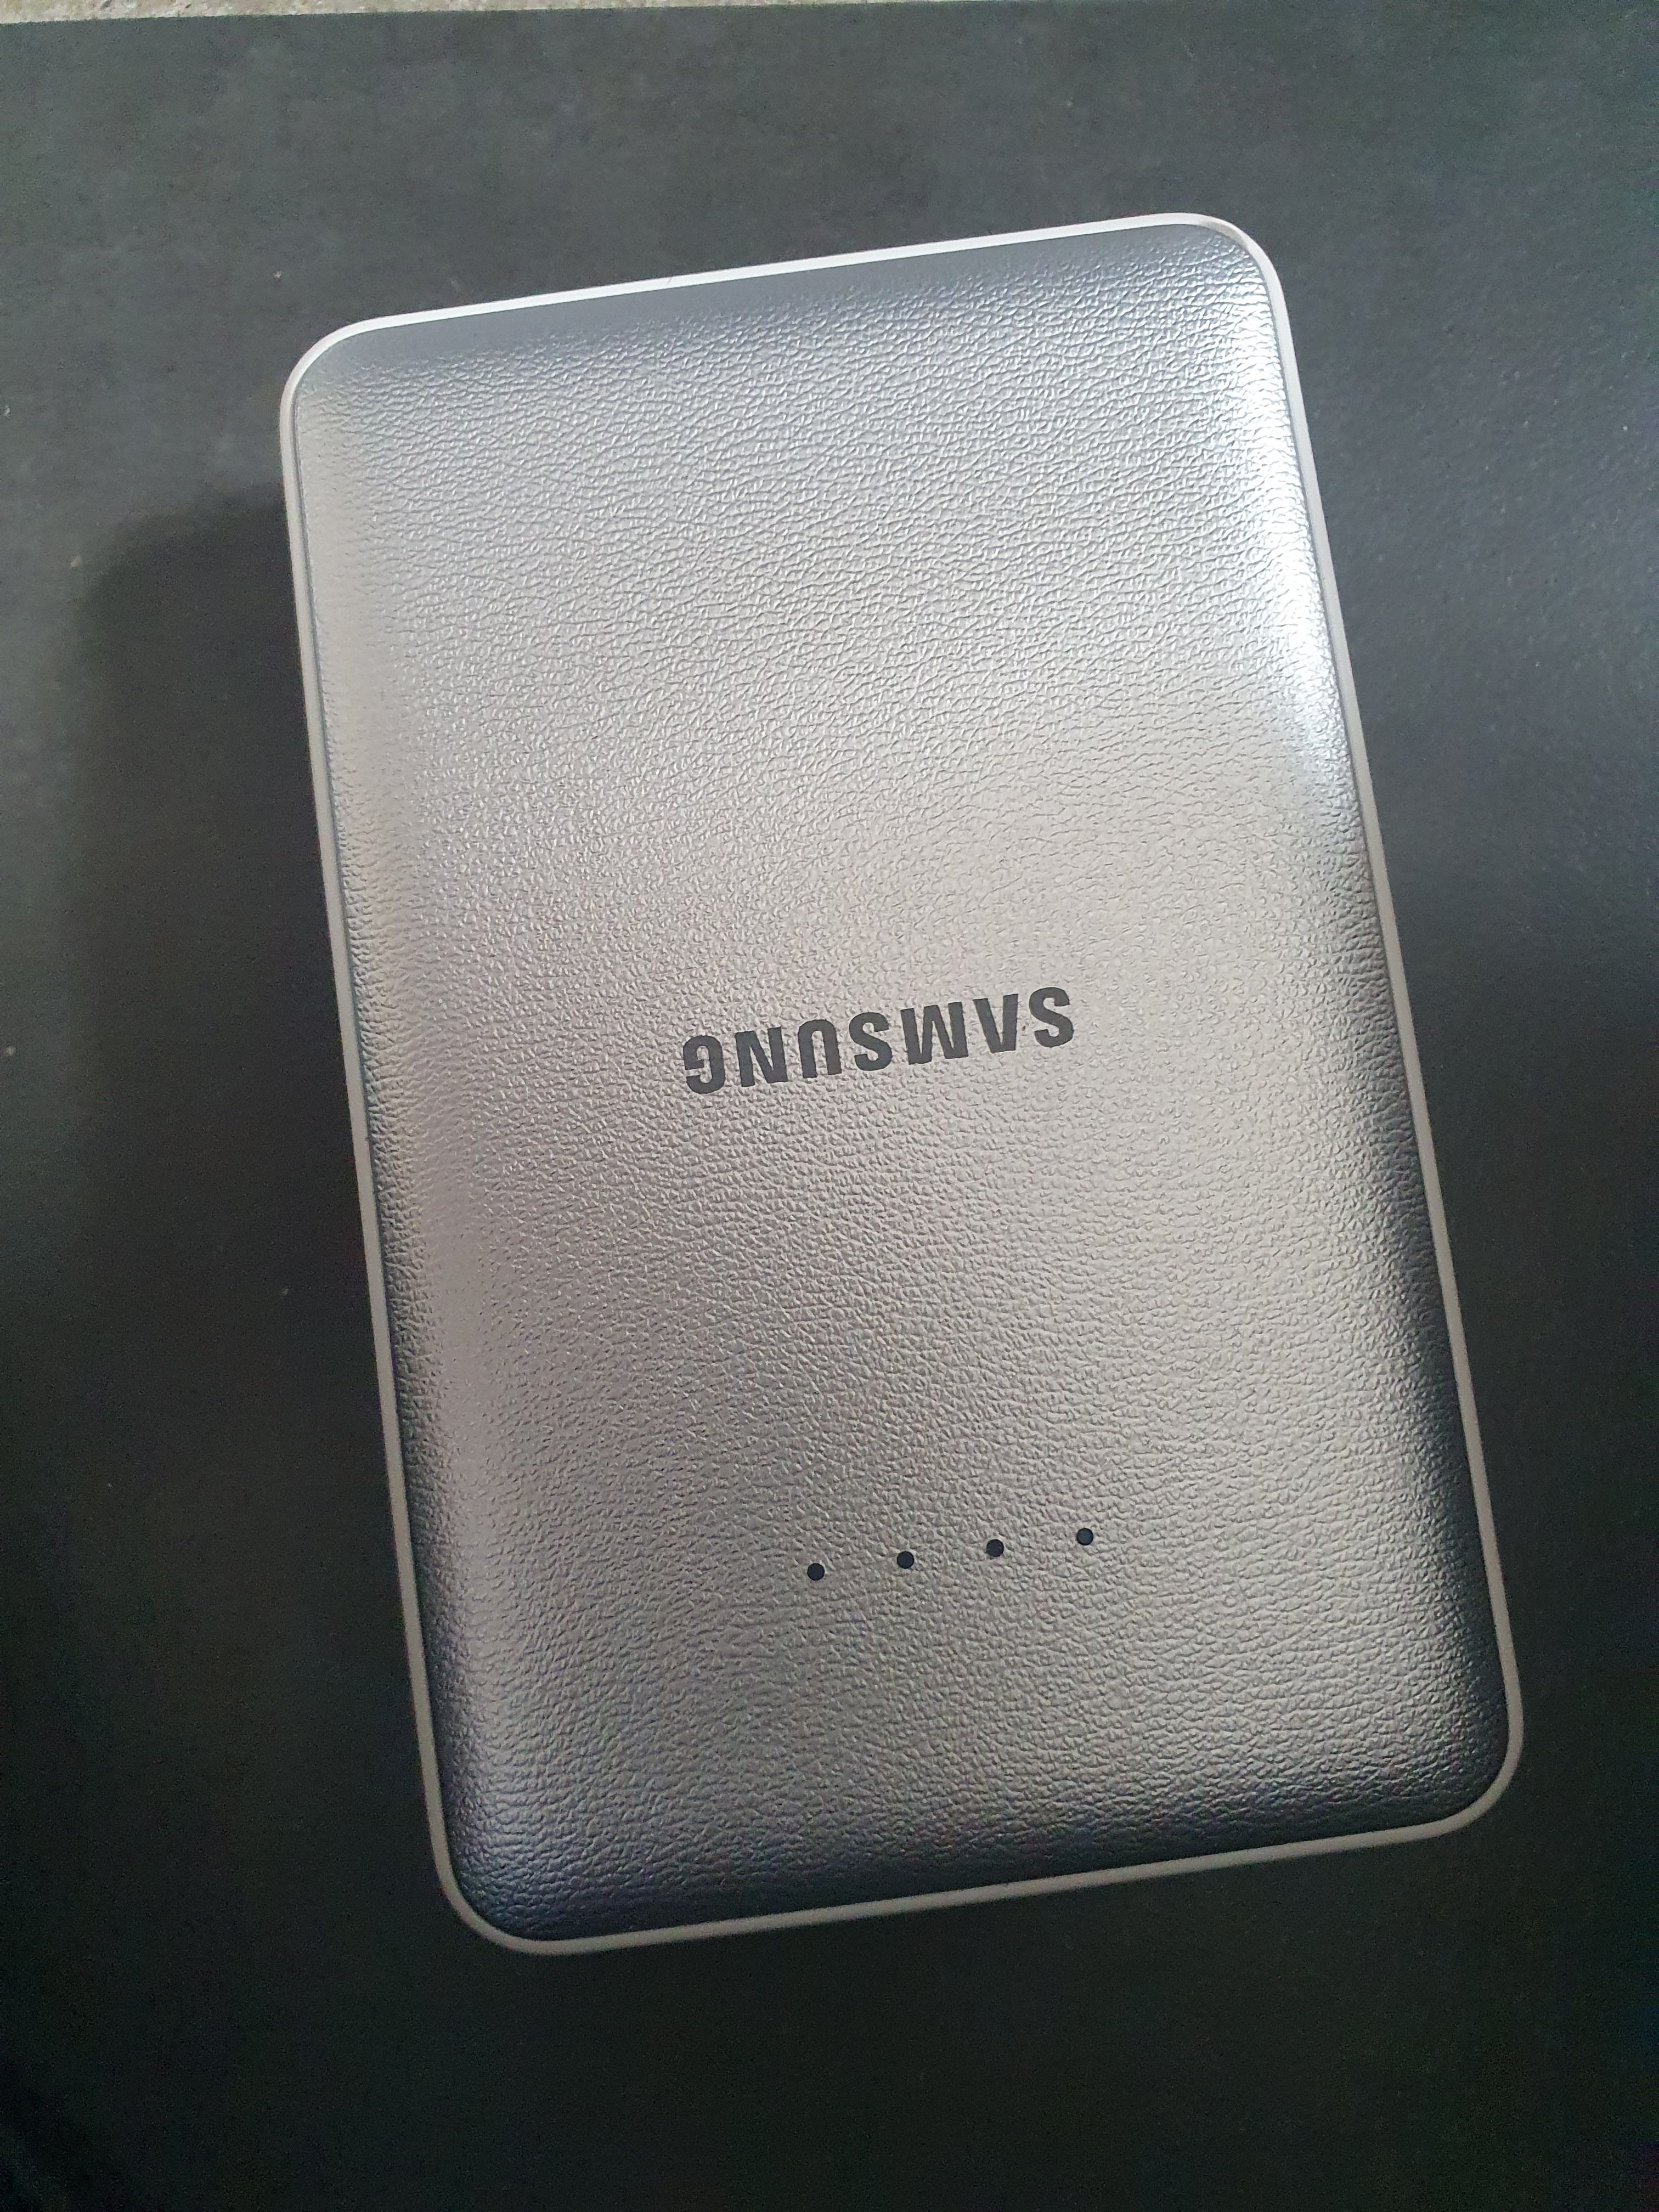 Batterie externe samsung - Samsung Community